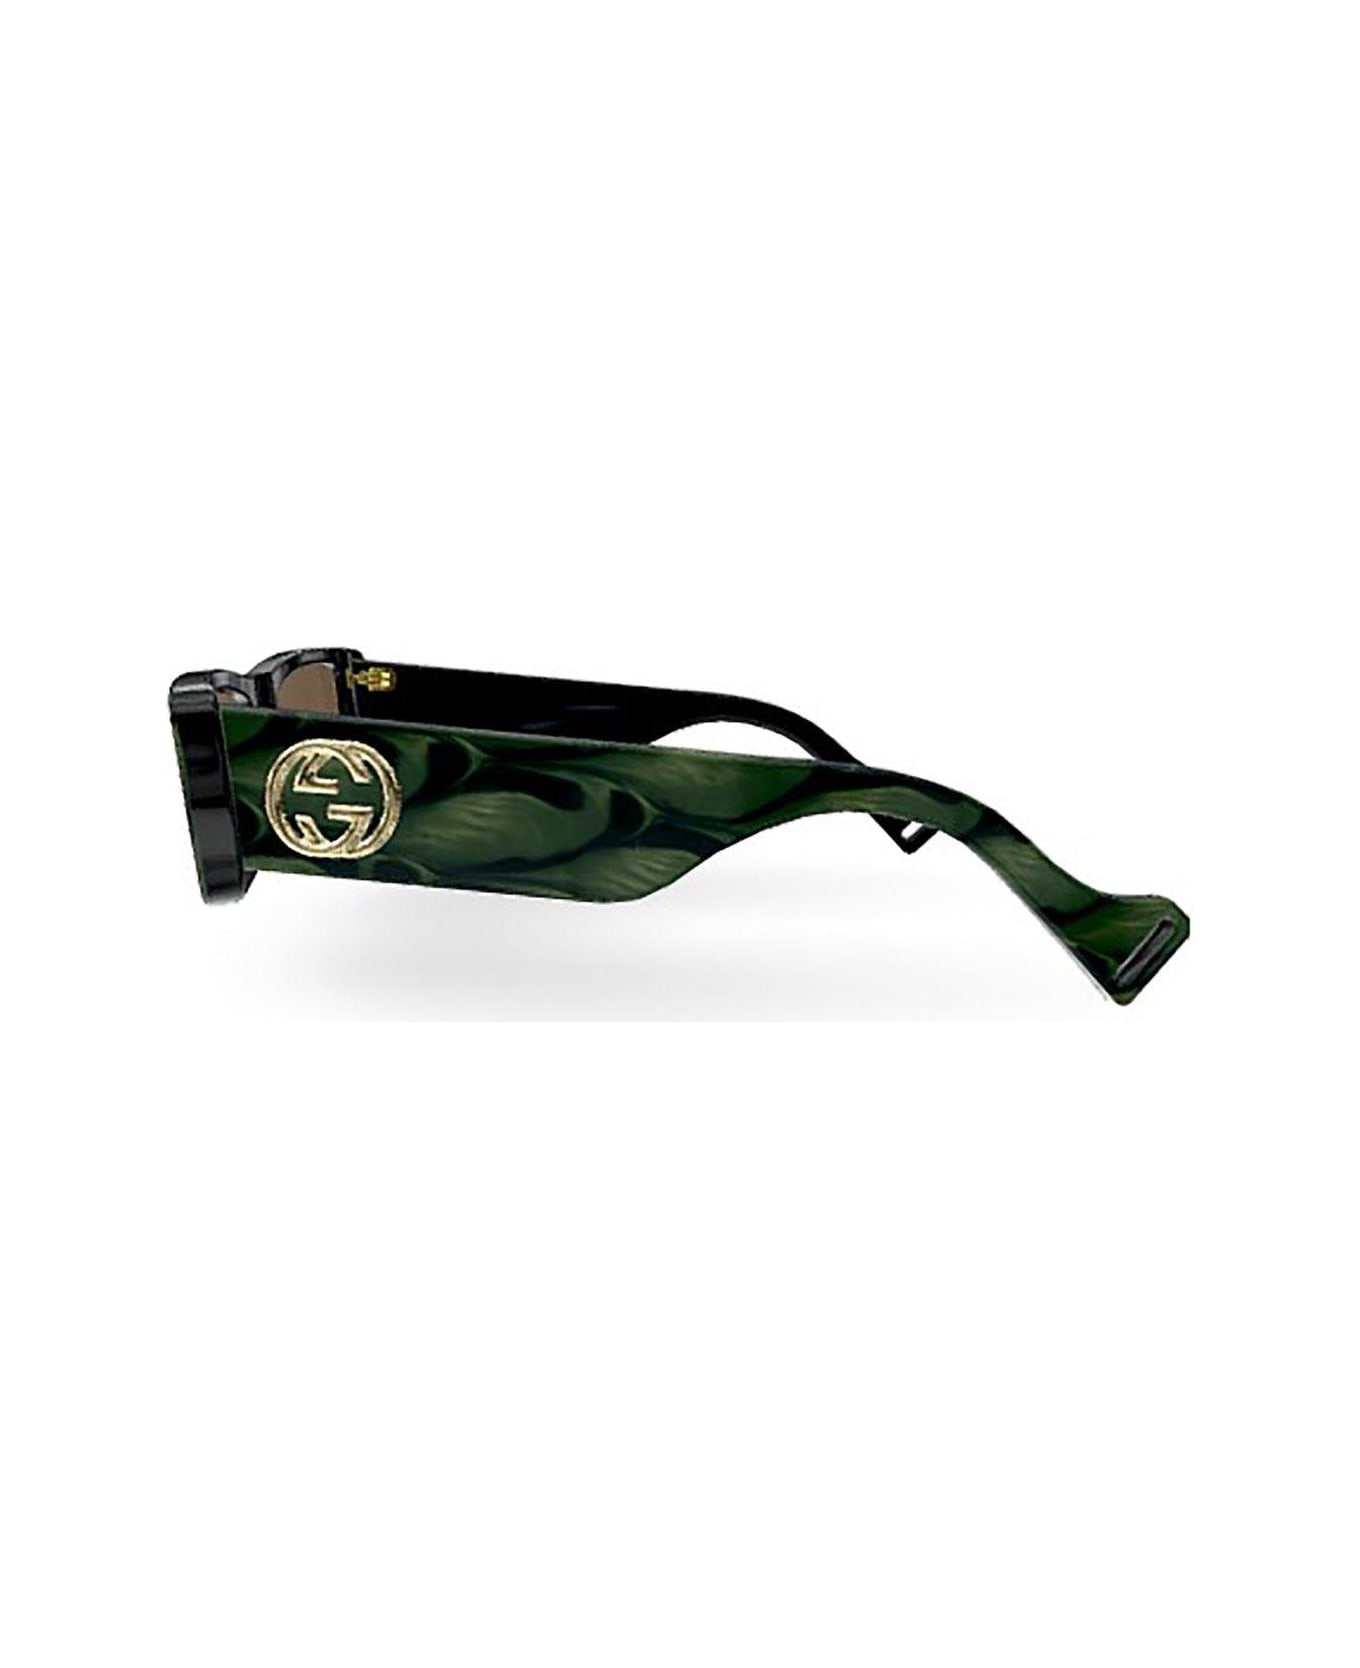 Gucci Eyewear Rectangular Frame Sunglasses - 014 green green bronze